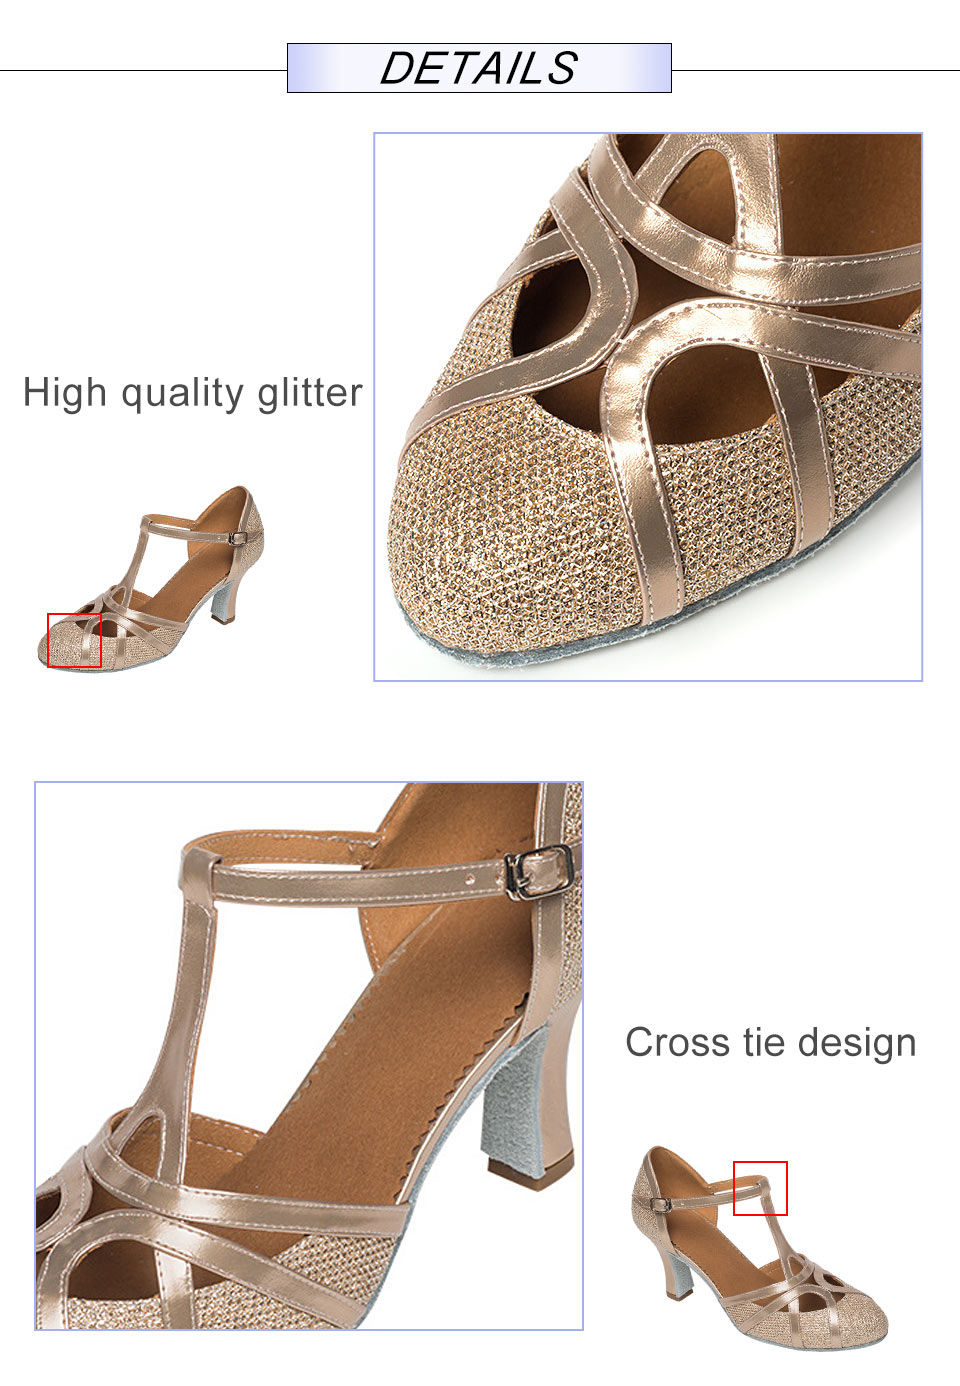 come4buy.com-Glitter Salsa Dance Shoes Women